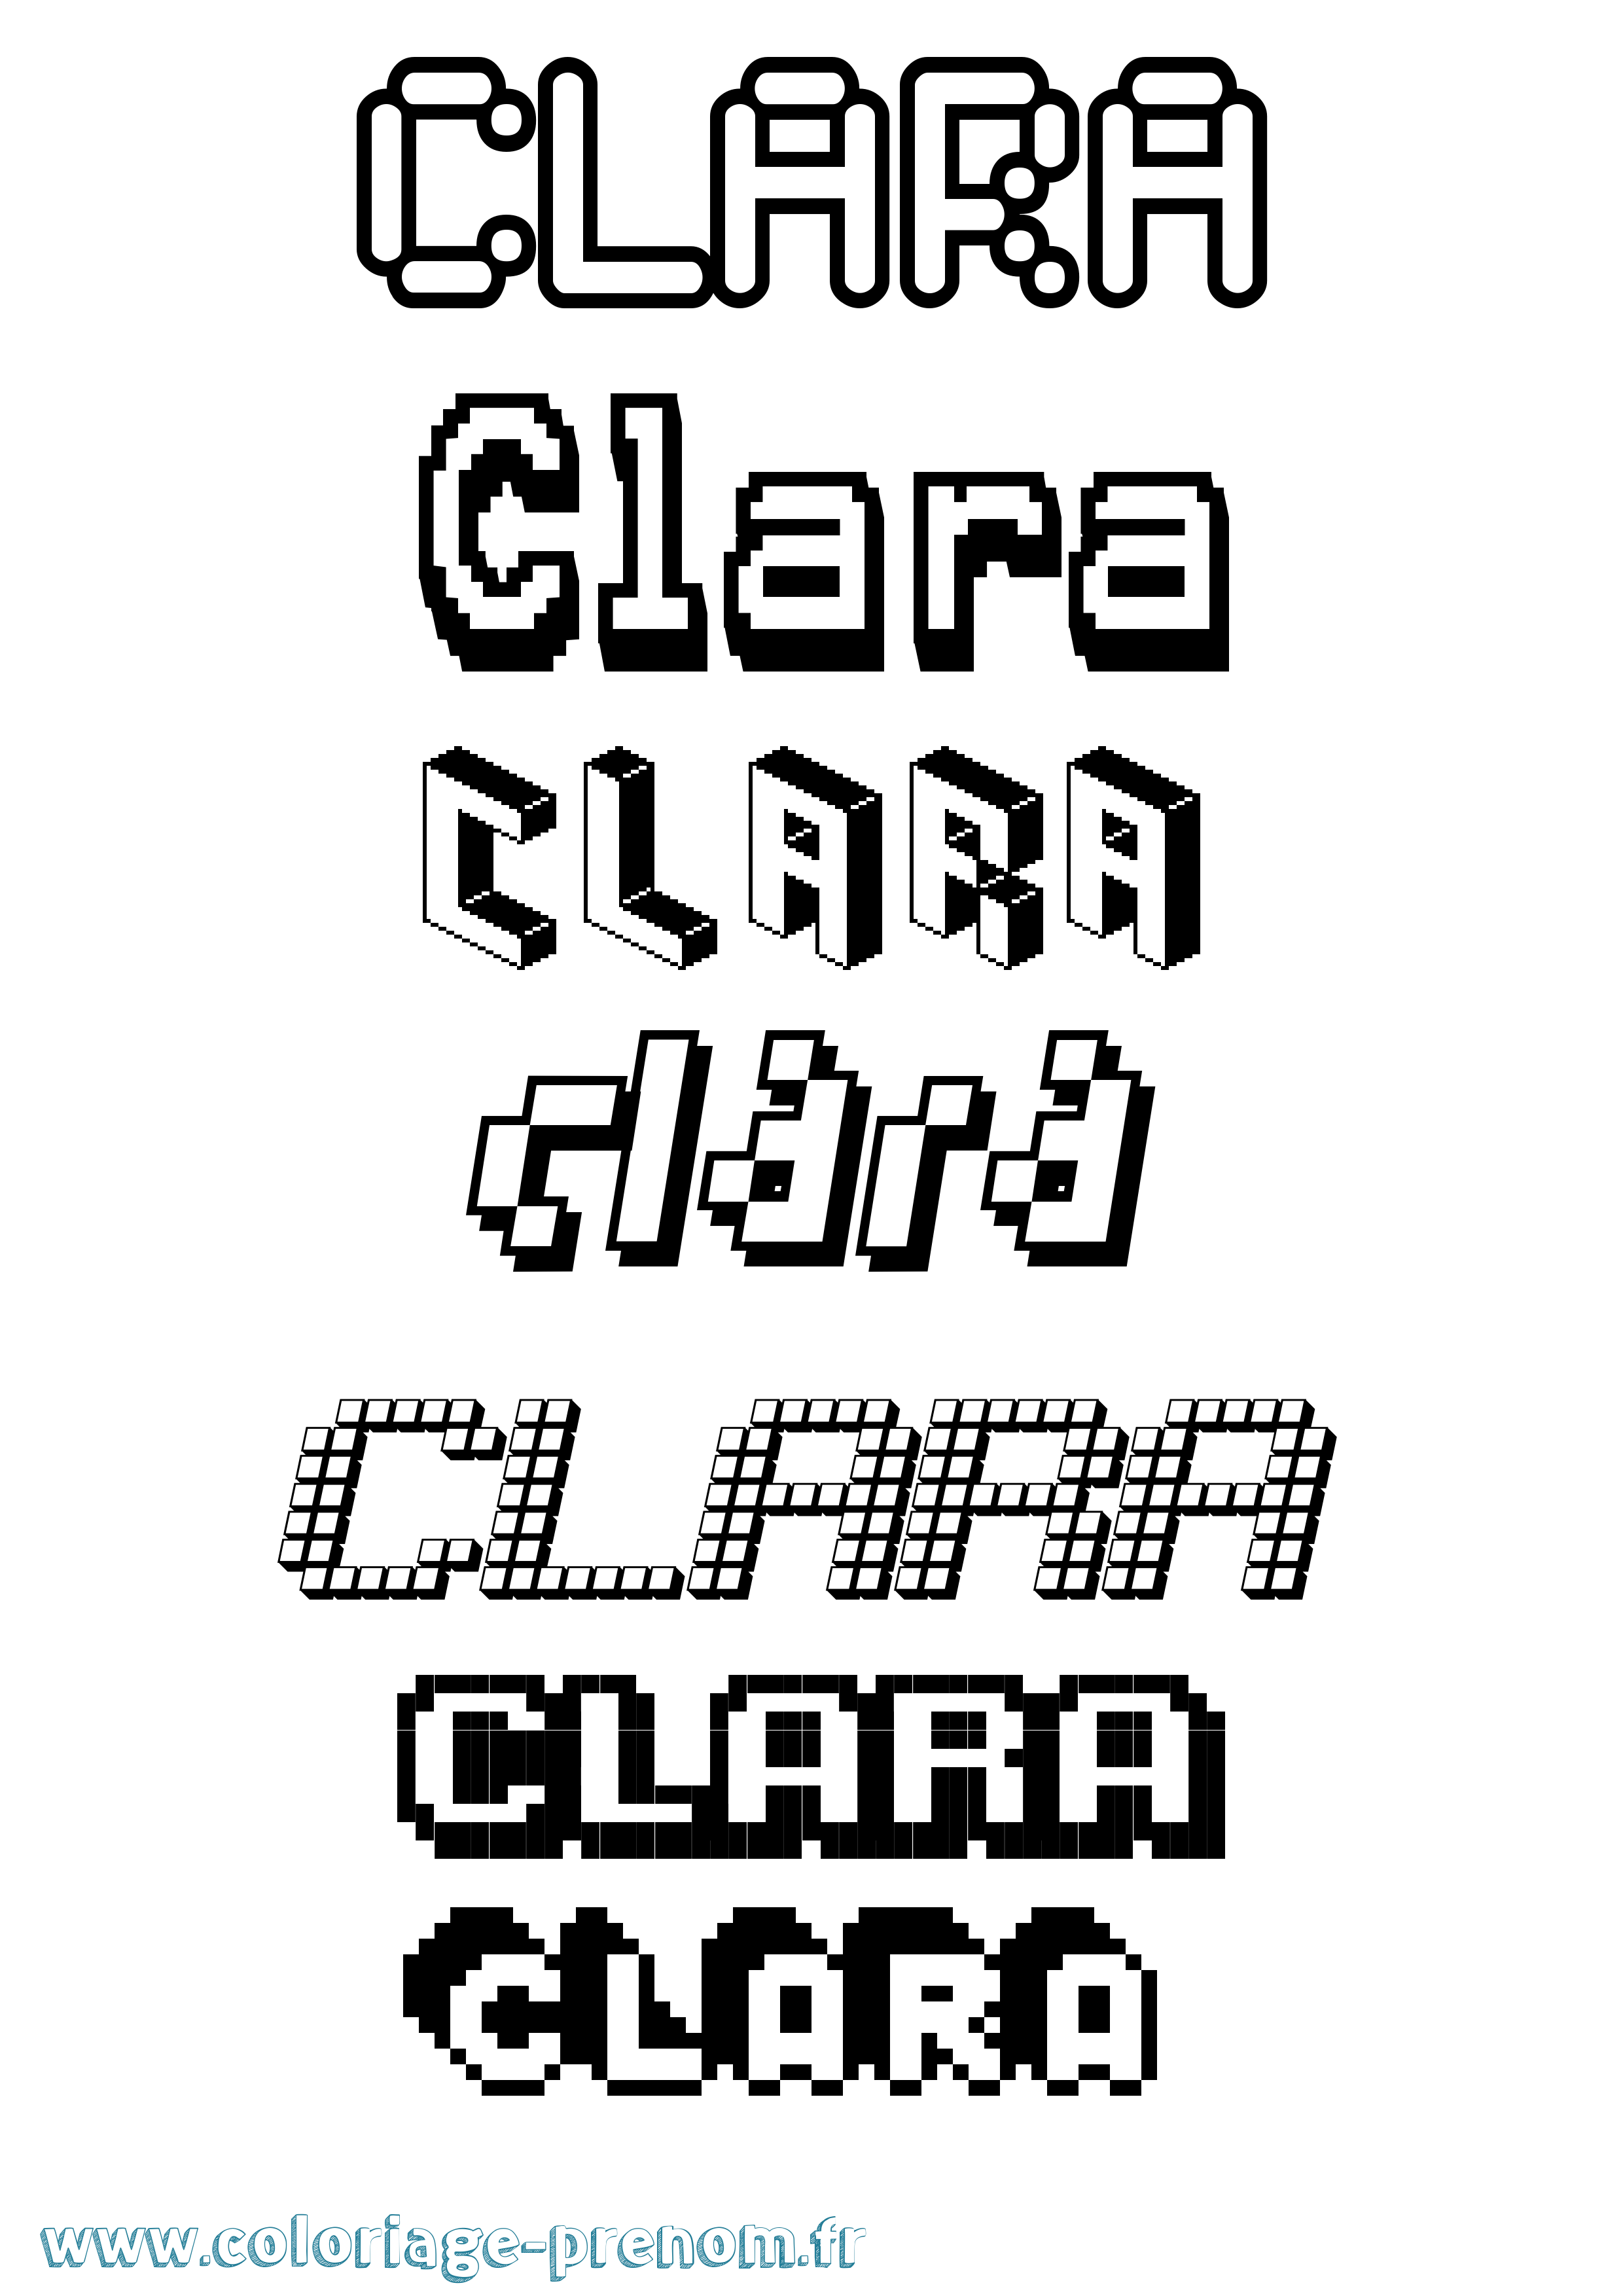 Coloriage prénom Clara Pixel